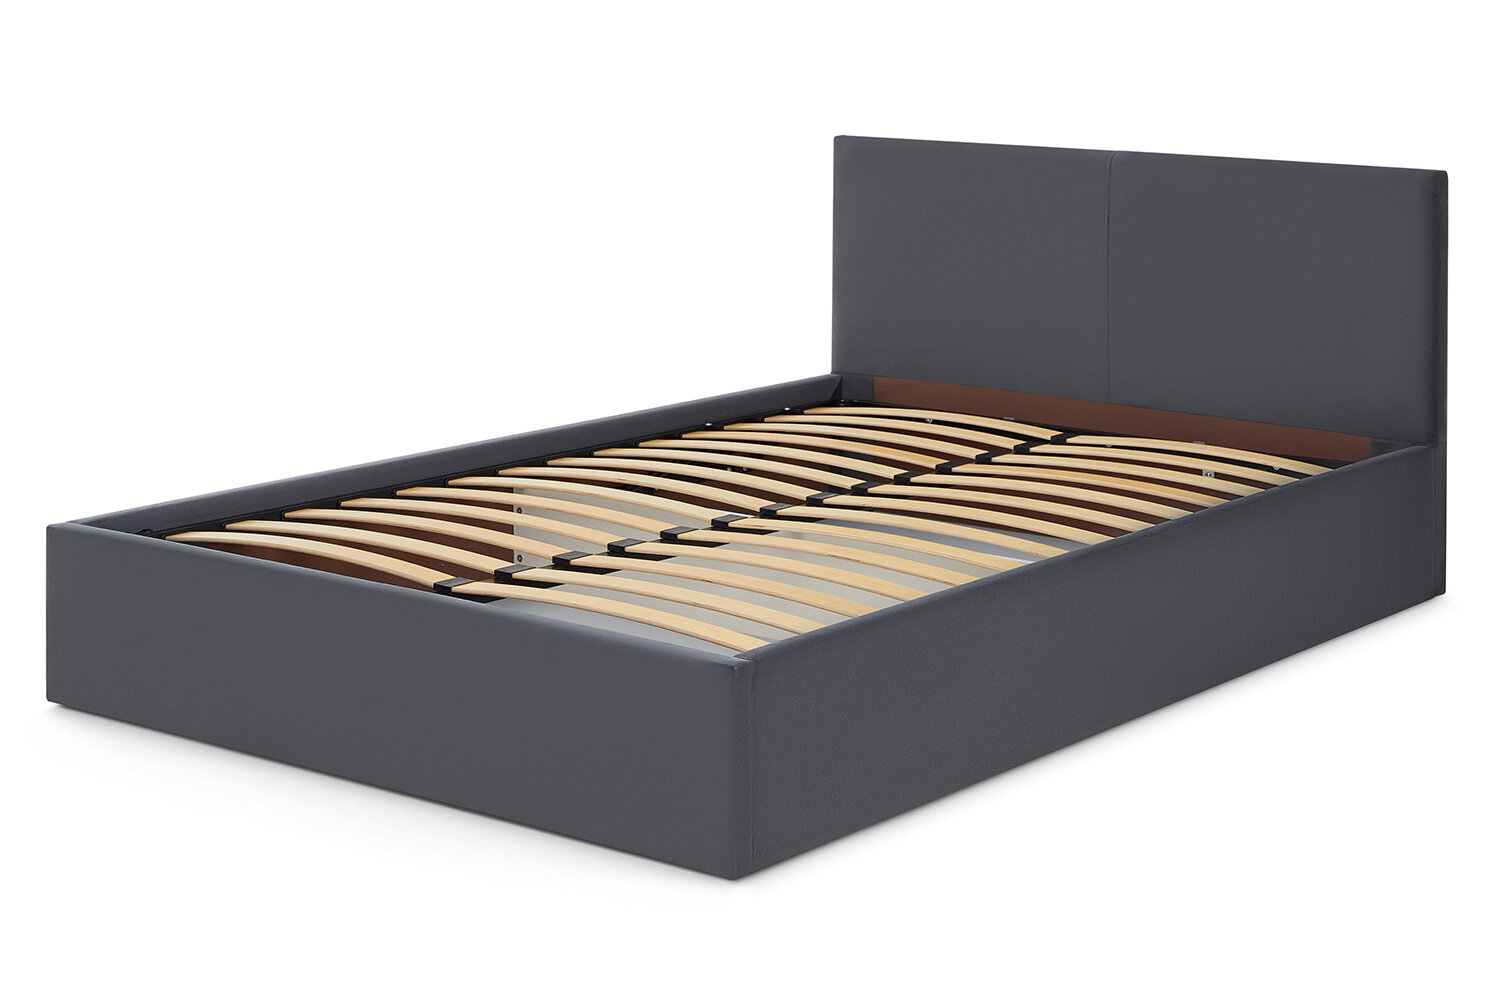 Каркас кровати Hoff Астра, 160х200 см, цвет темно-серый